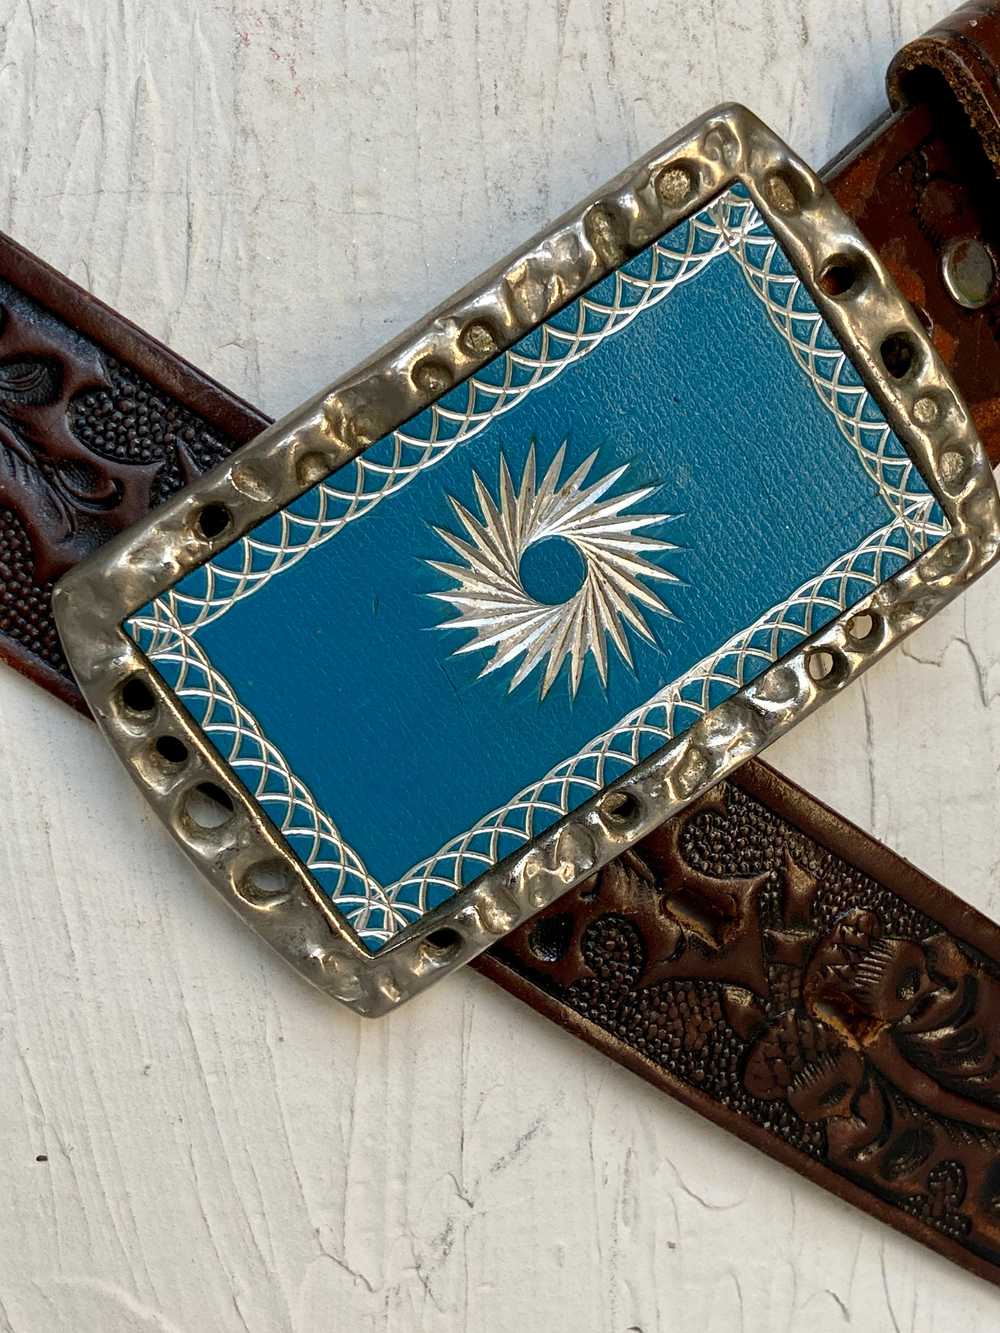 Vintage tooled leather belt - image 9